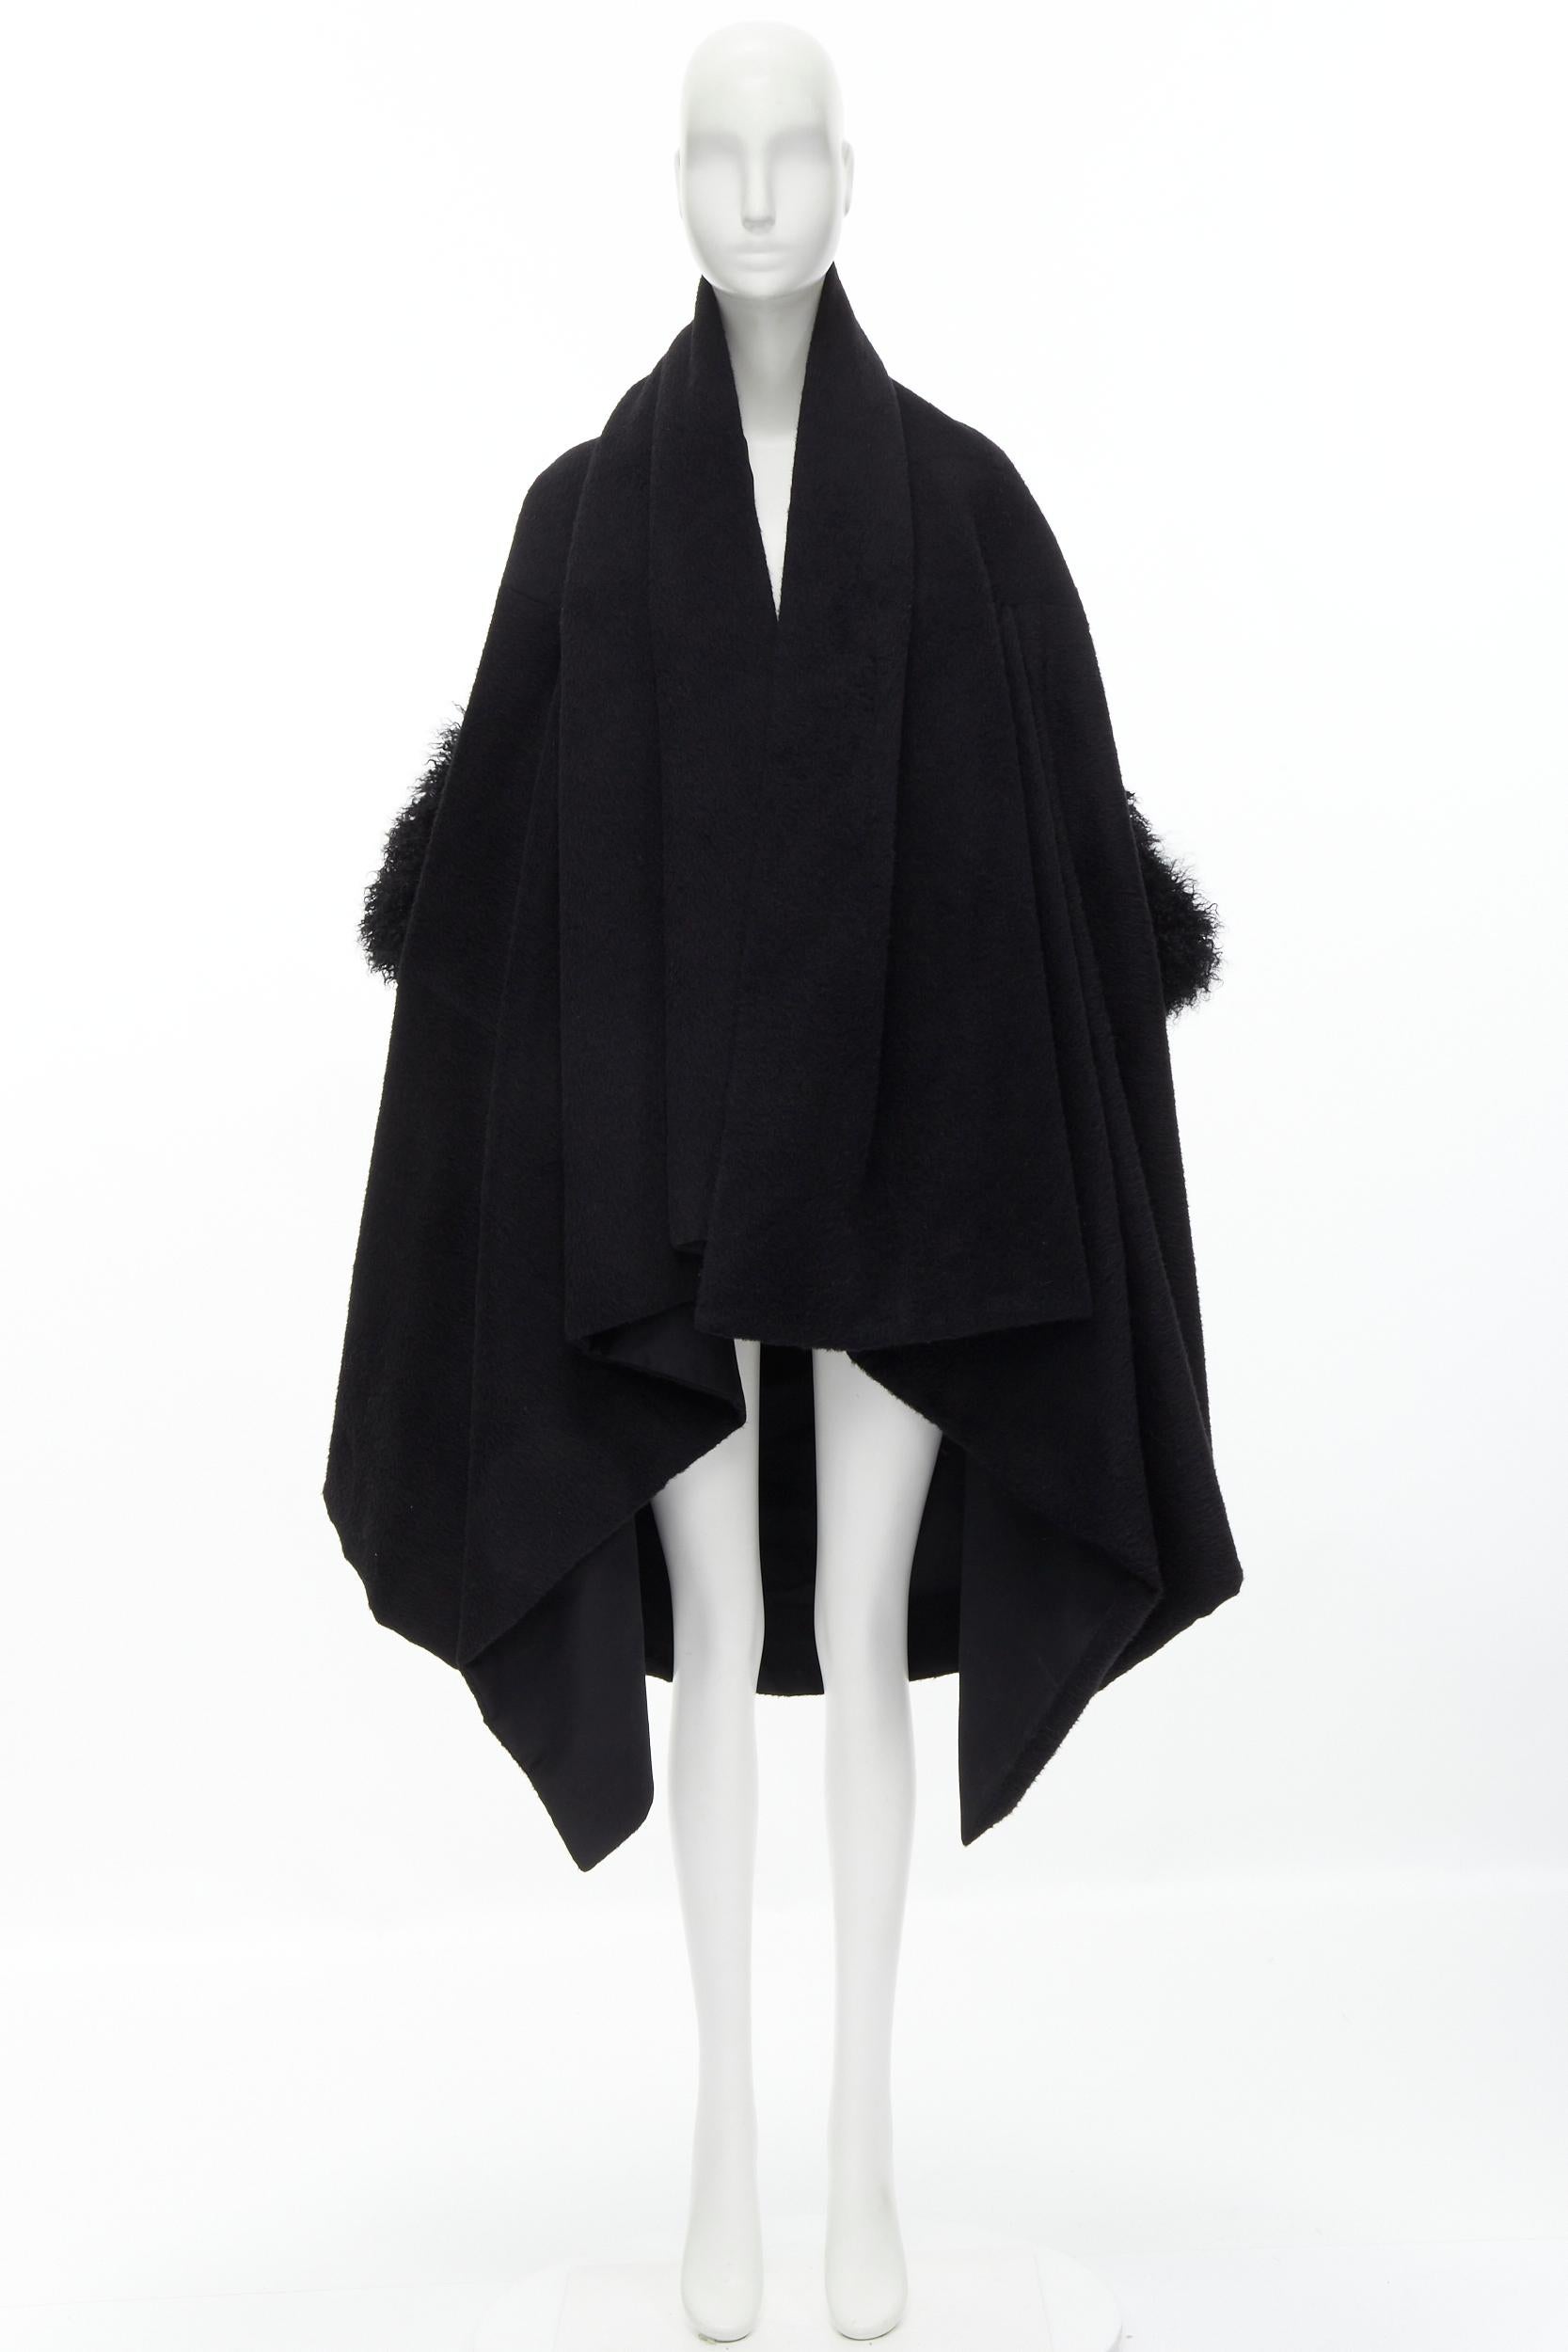 YOHJI YAMAMOTO black brushed wool shearling cuff draped cocoon coat S 5